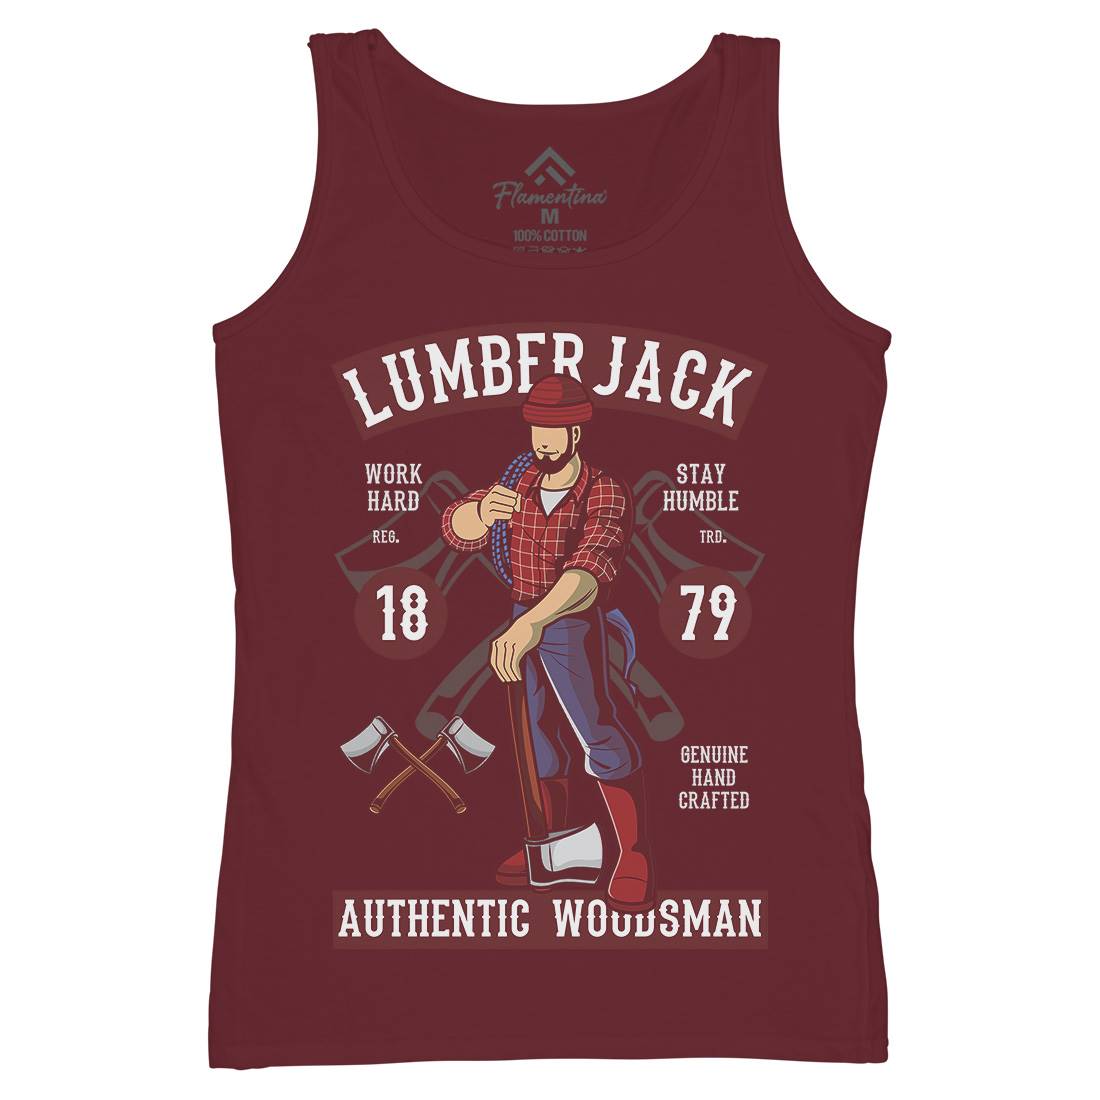 Lumberjack Womens Organic Tank Top Vest Work C389